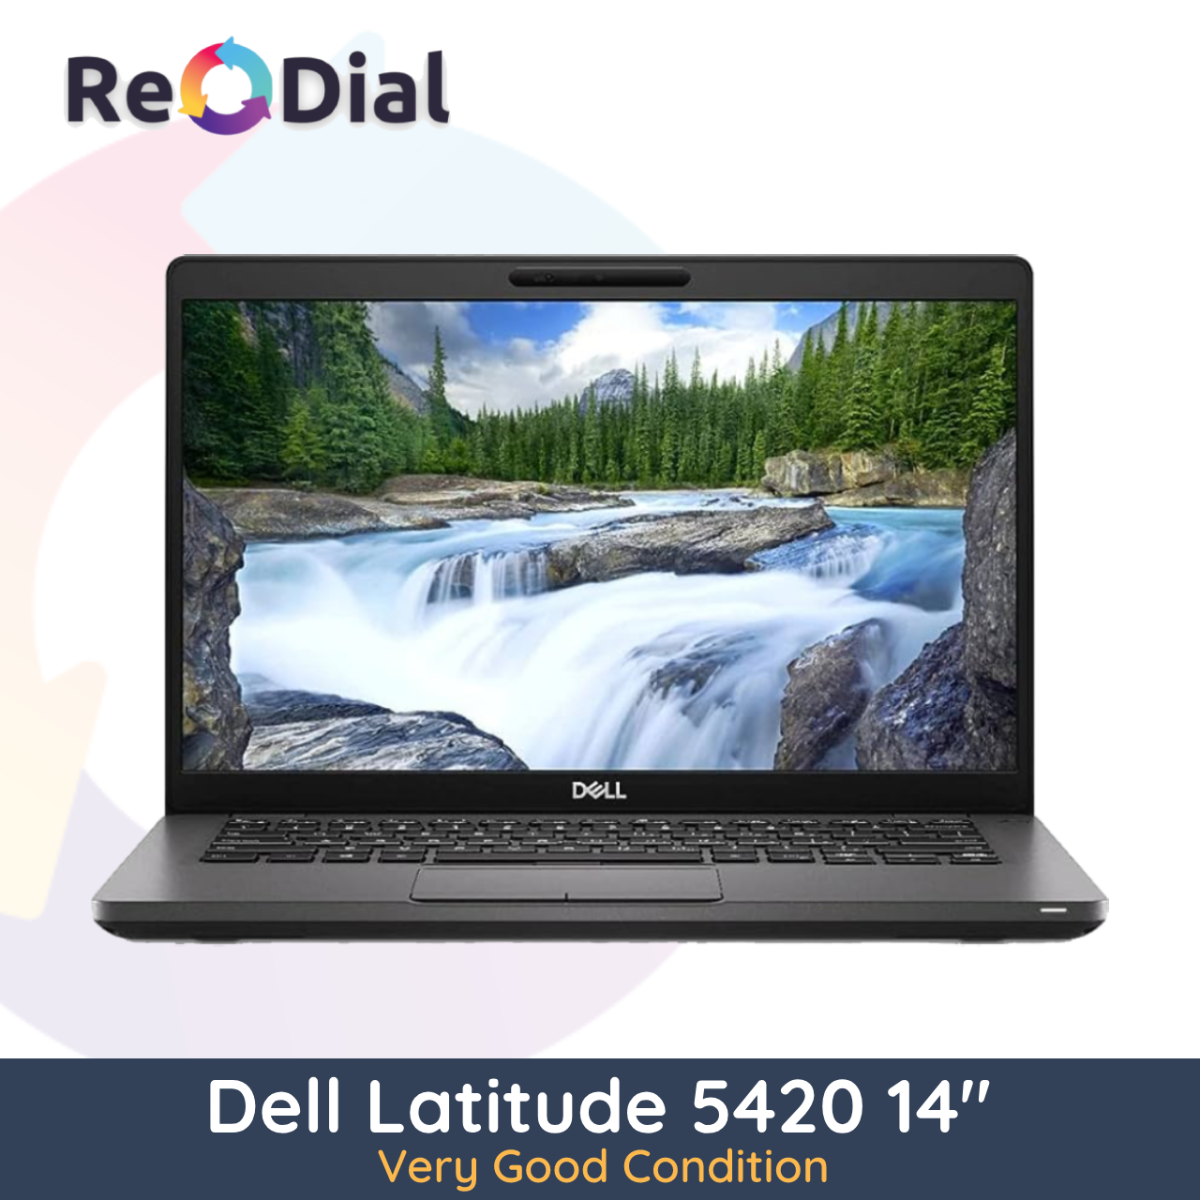 Dell Latitude 5420 14" Laptop i7-1185G7 512Gb 8Gb/16Gb RAM - Very Good Condition